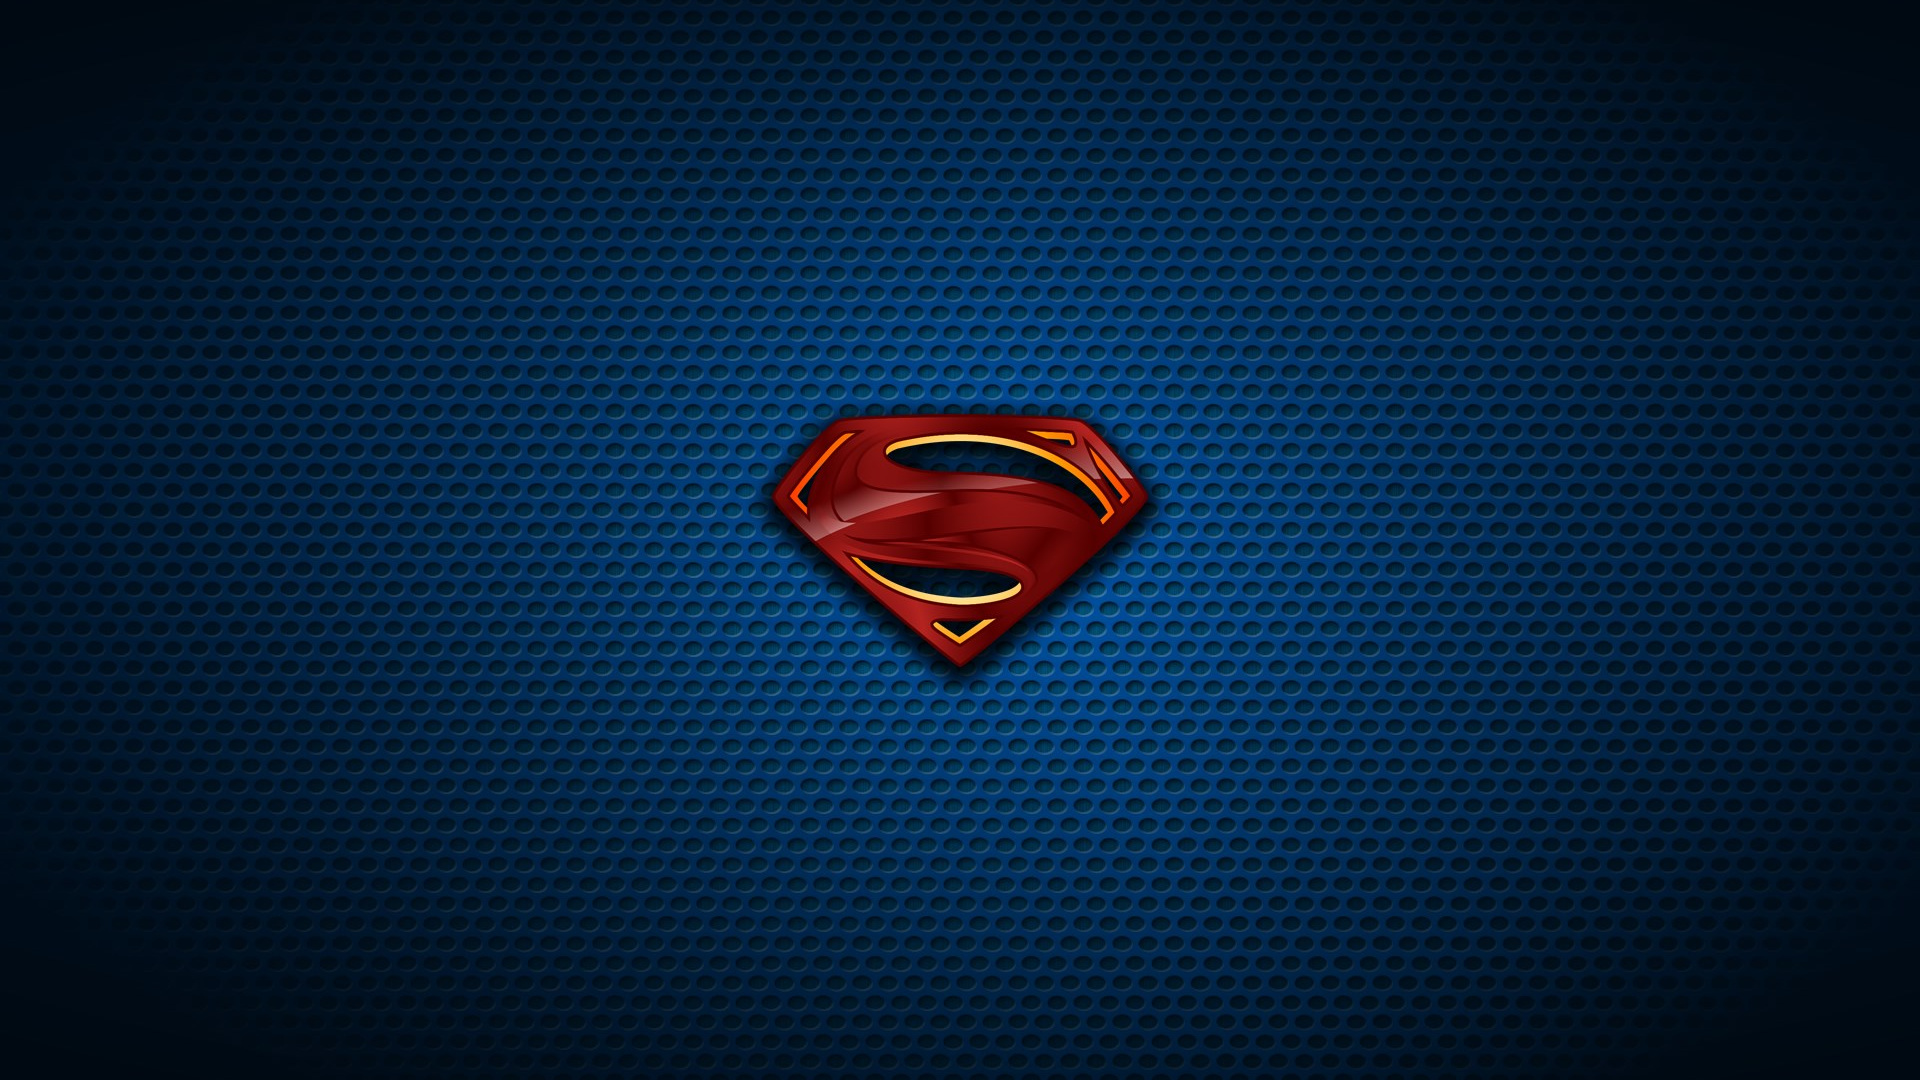 samsung galaxy j2 fond d'écran full hd,rouge,superman,cœur,personnage fictif,symbole